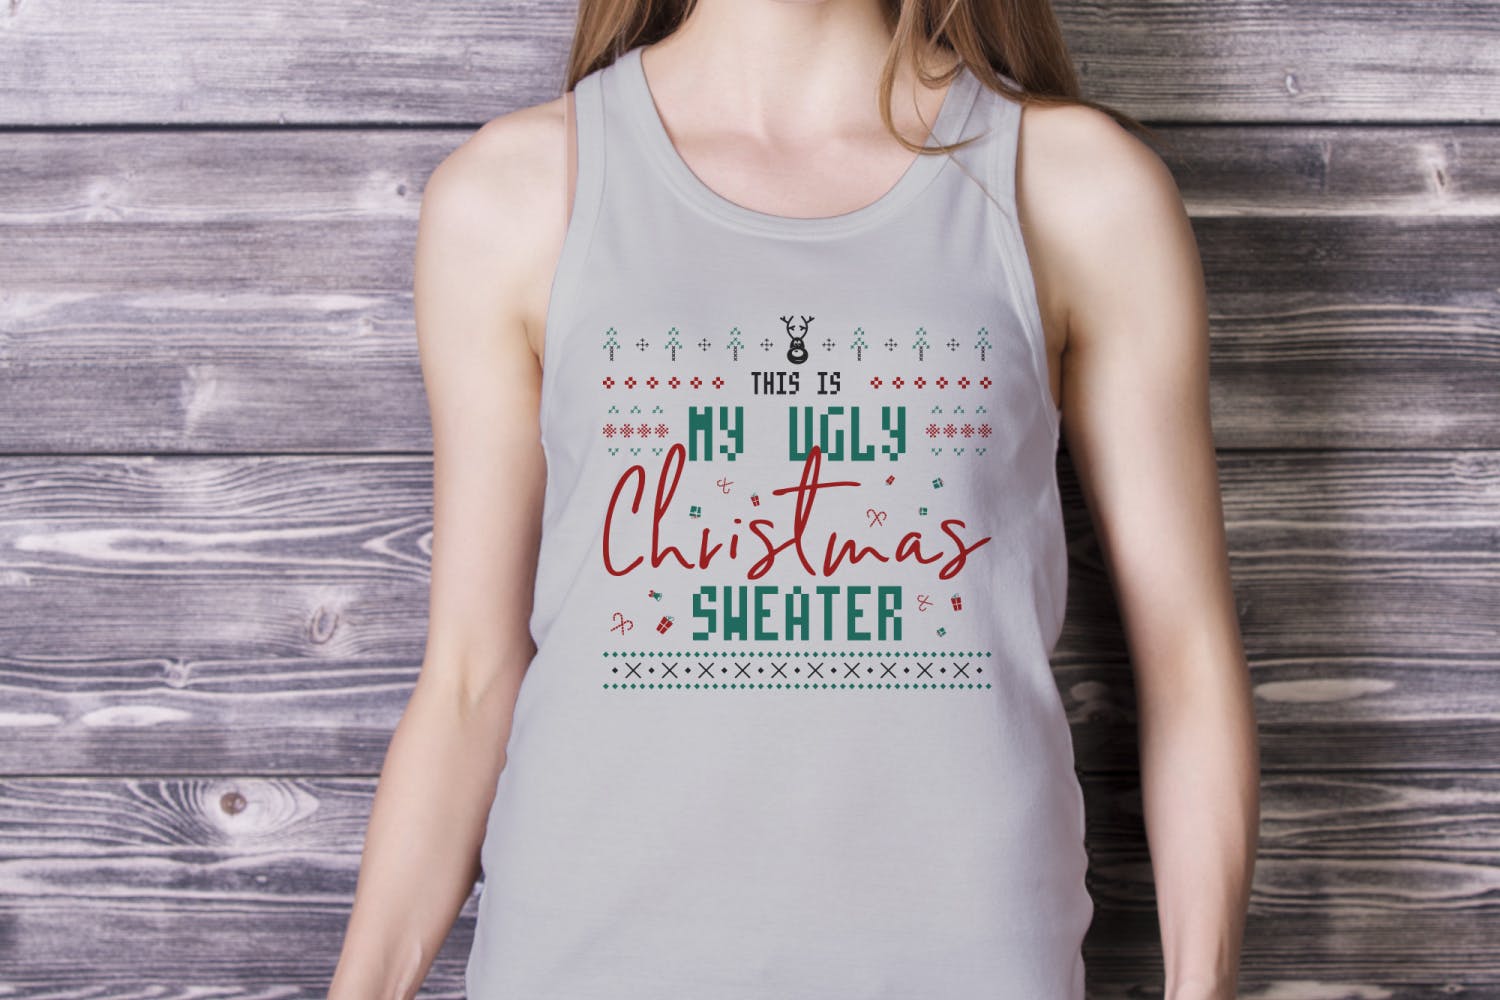 复古风格圣诞主题T恤印花图案设计素材 Retro Ugly Christmas Print TShirt Design with Deer插图(1)